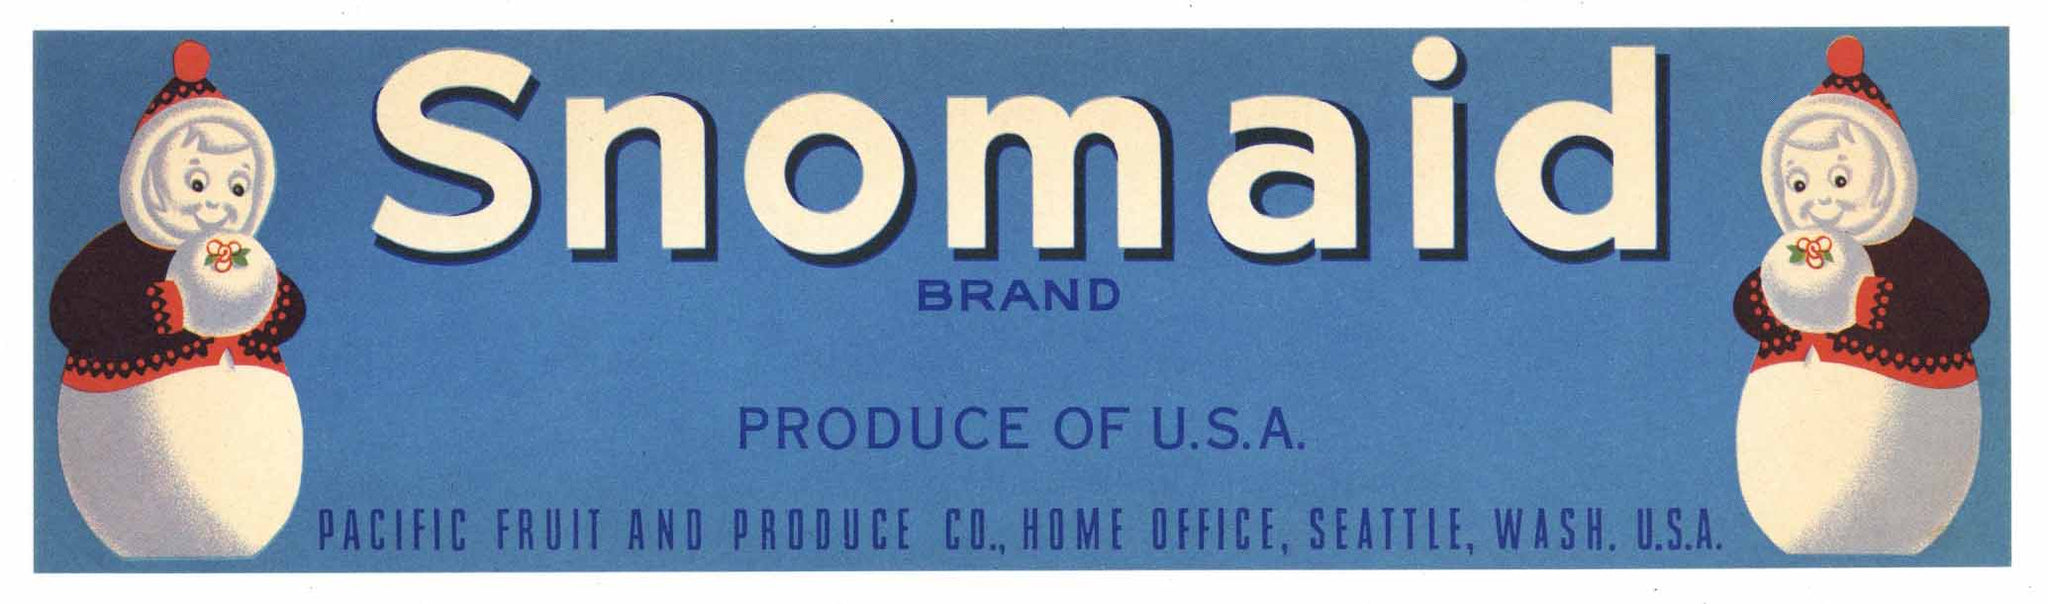 Snomaid Brand Vintage Produce Crate Label